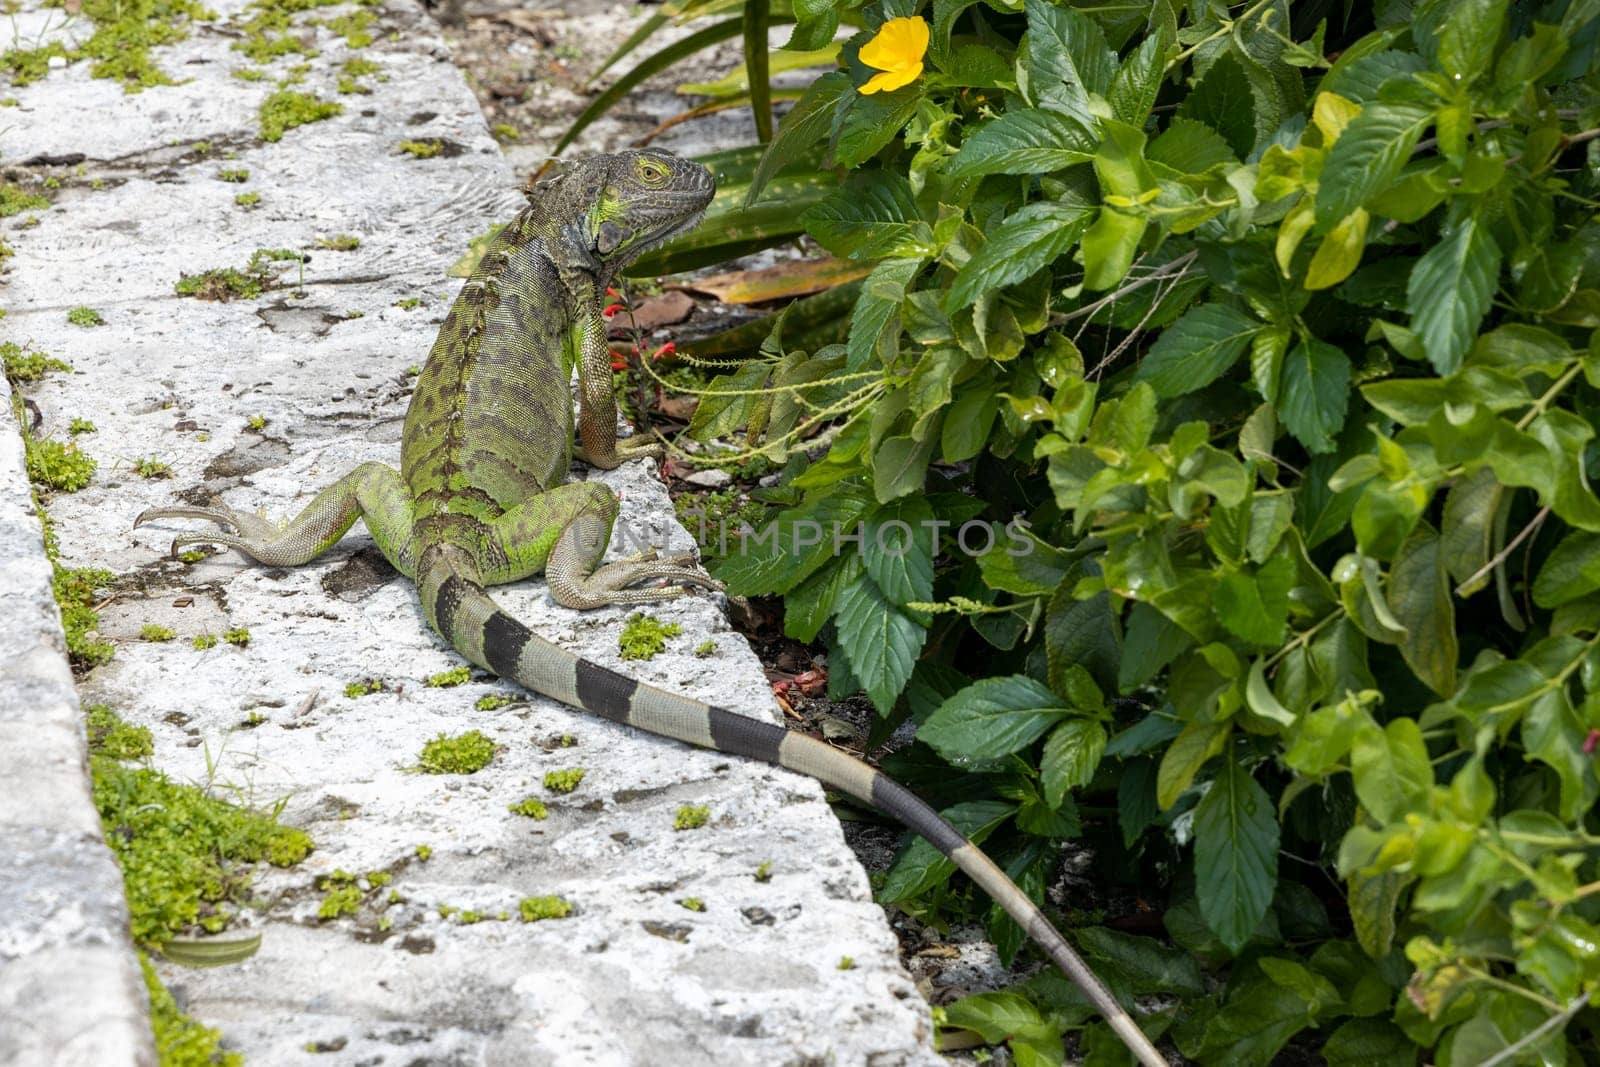 Green exotic iguana among green foliage, wild reptilian, tropical animal, wildlife.